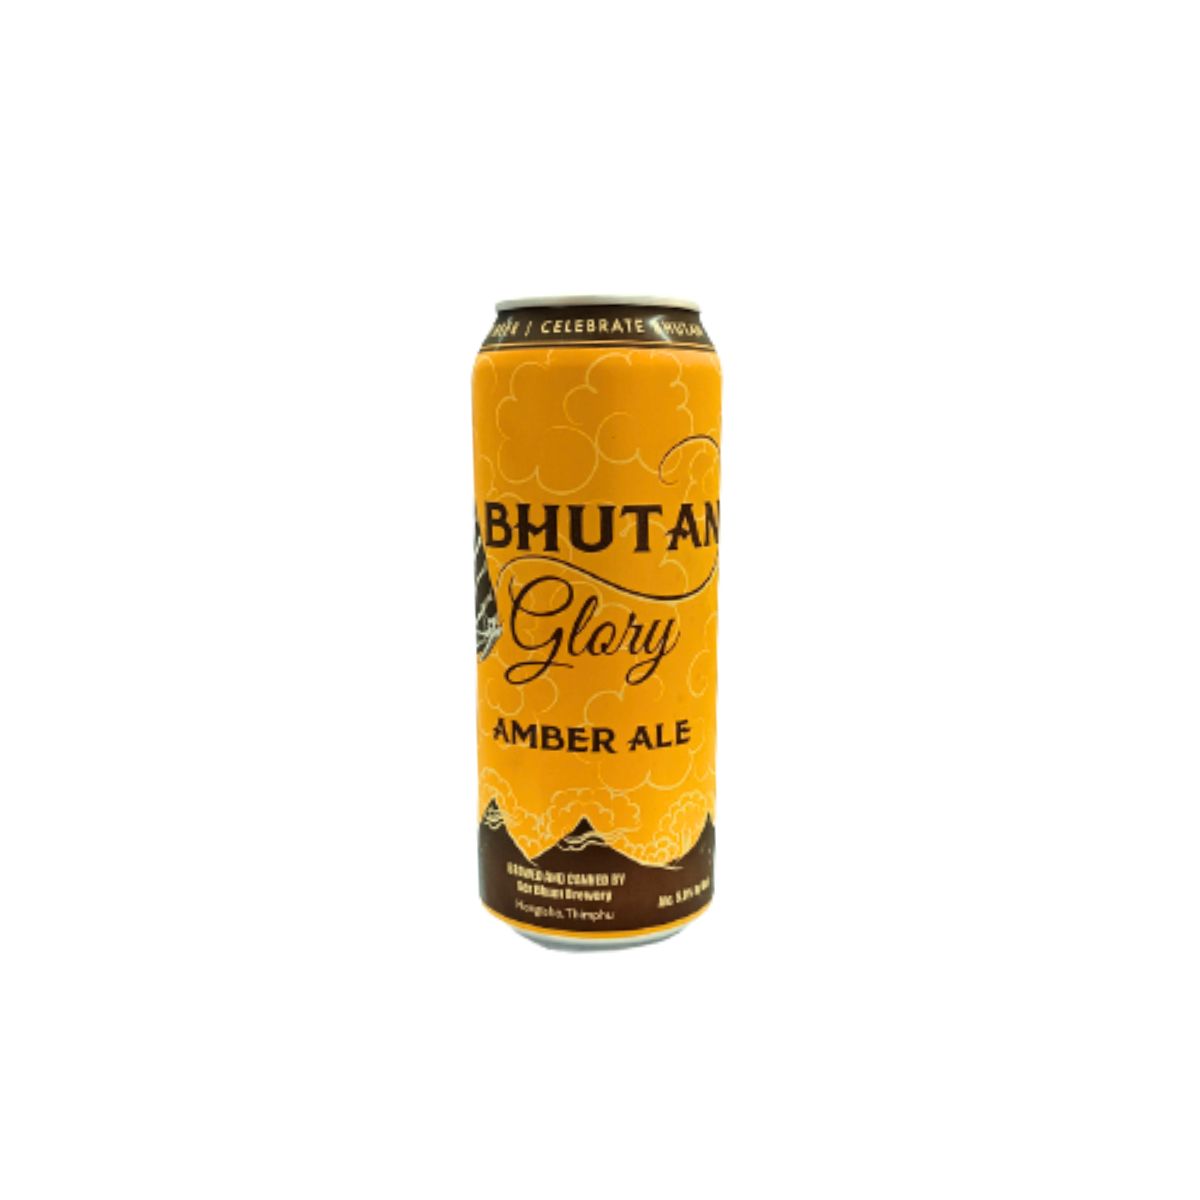 Ser Bhum Beer - Bhutan Glory Amber Ale - Can - 500ml